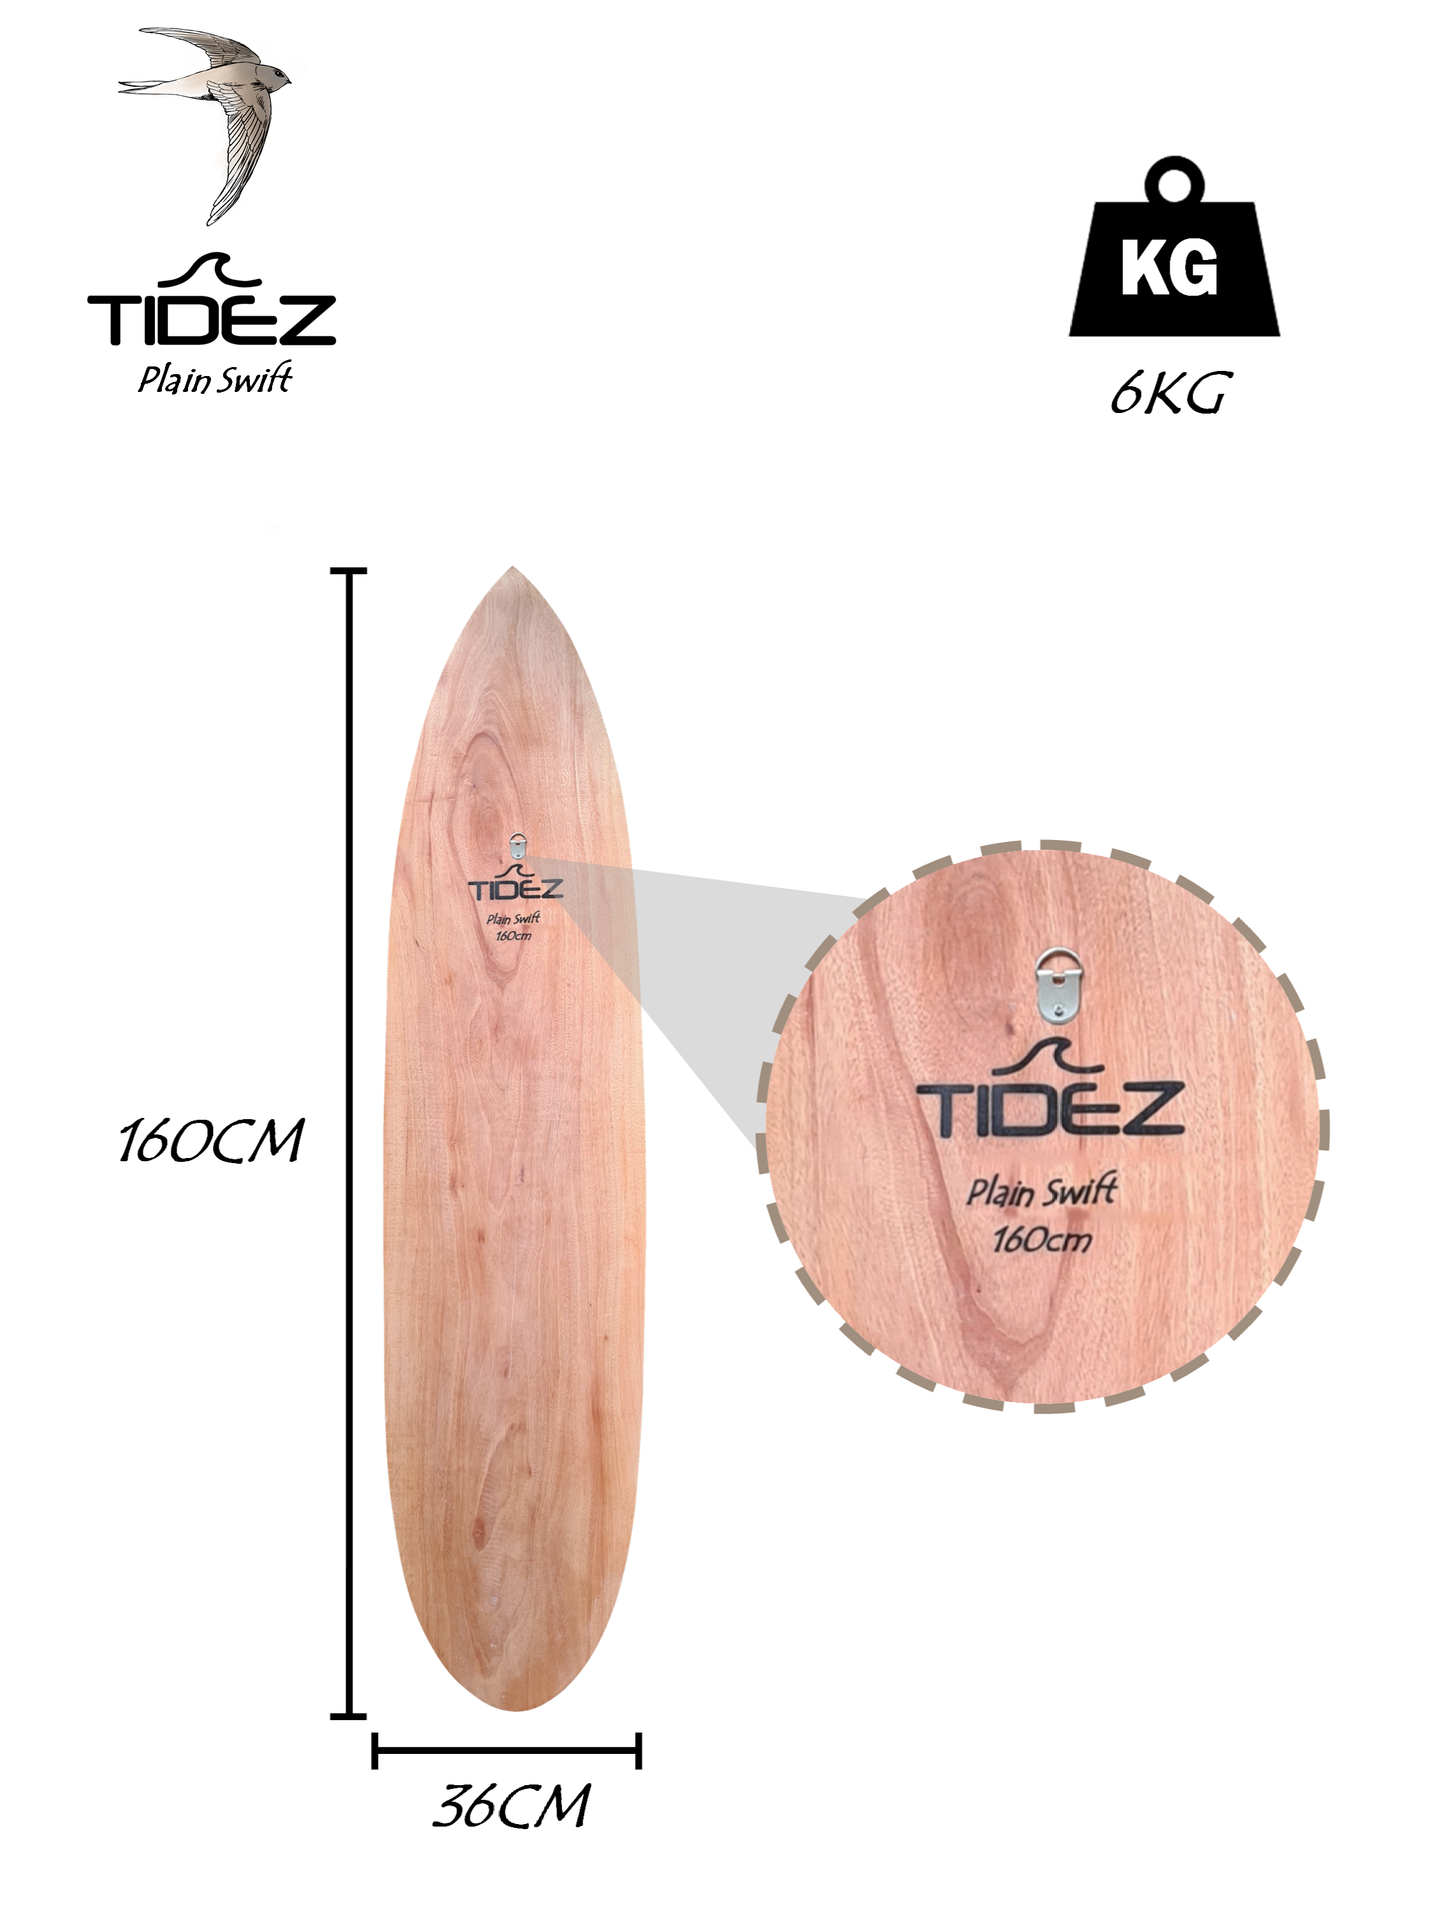 Tidez Plain Swift 160cm